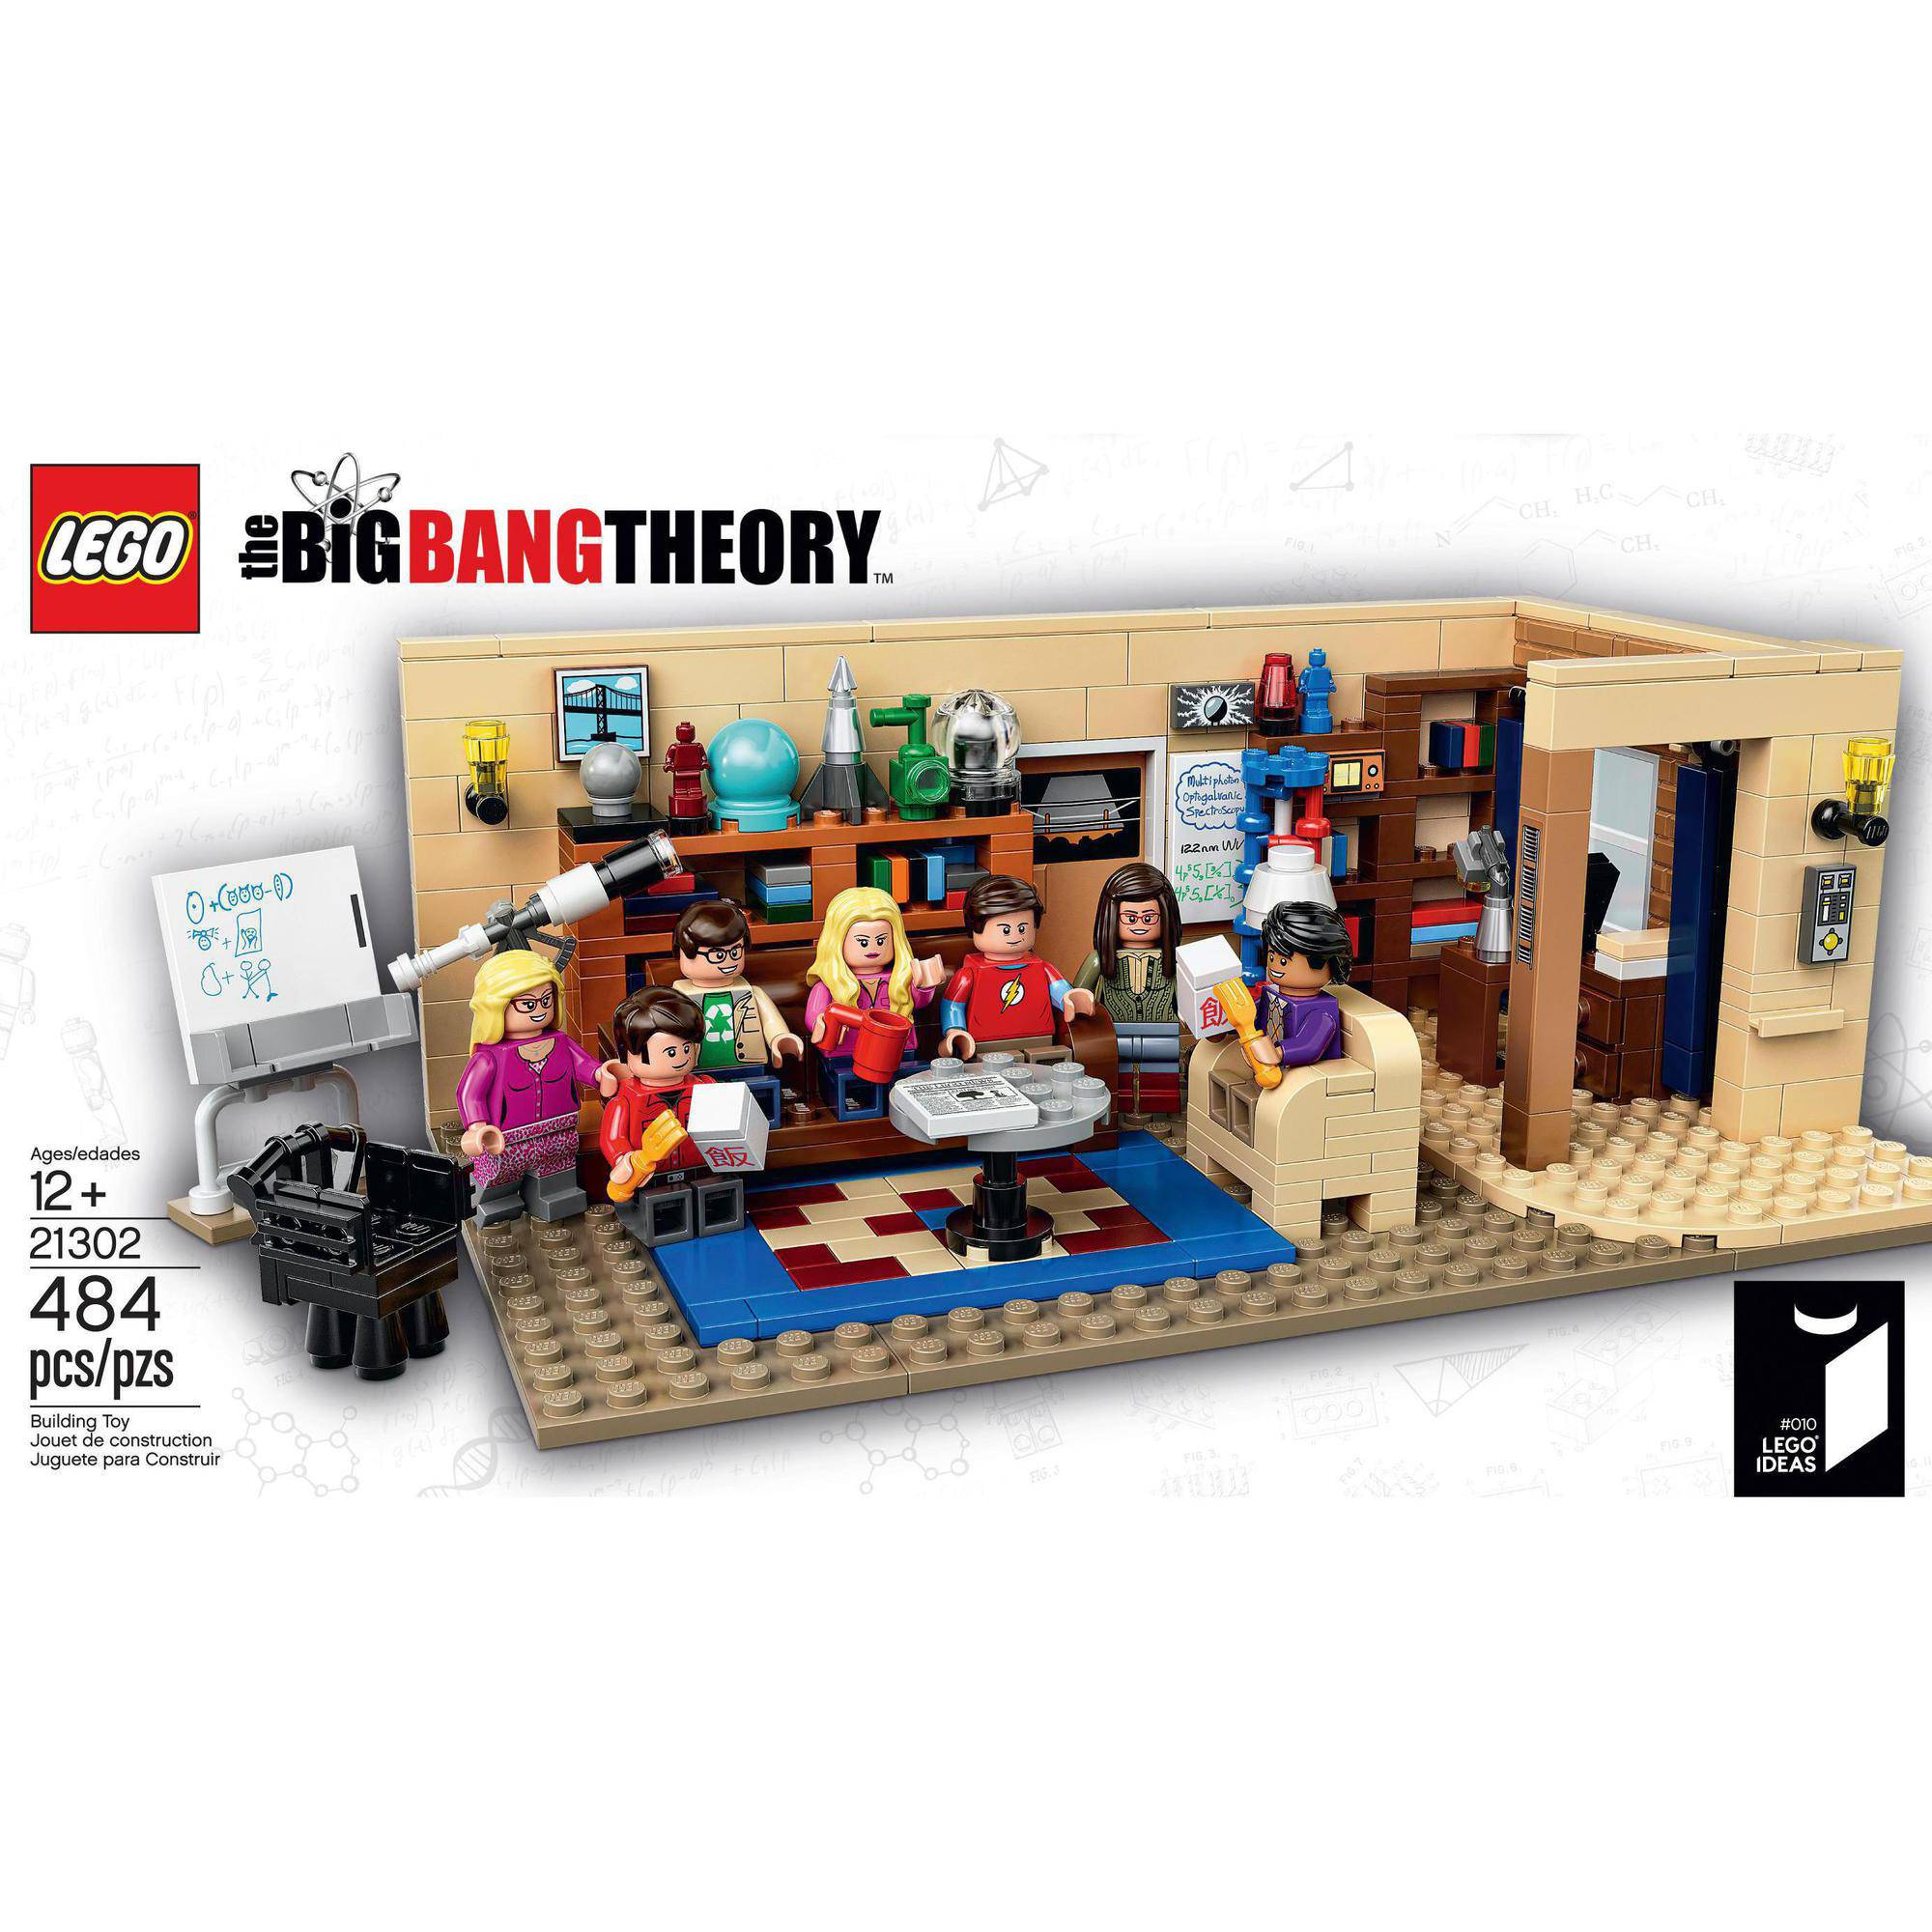 LEGO Ideas The Big Bang Theory, 21302 - image 2 of 6